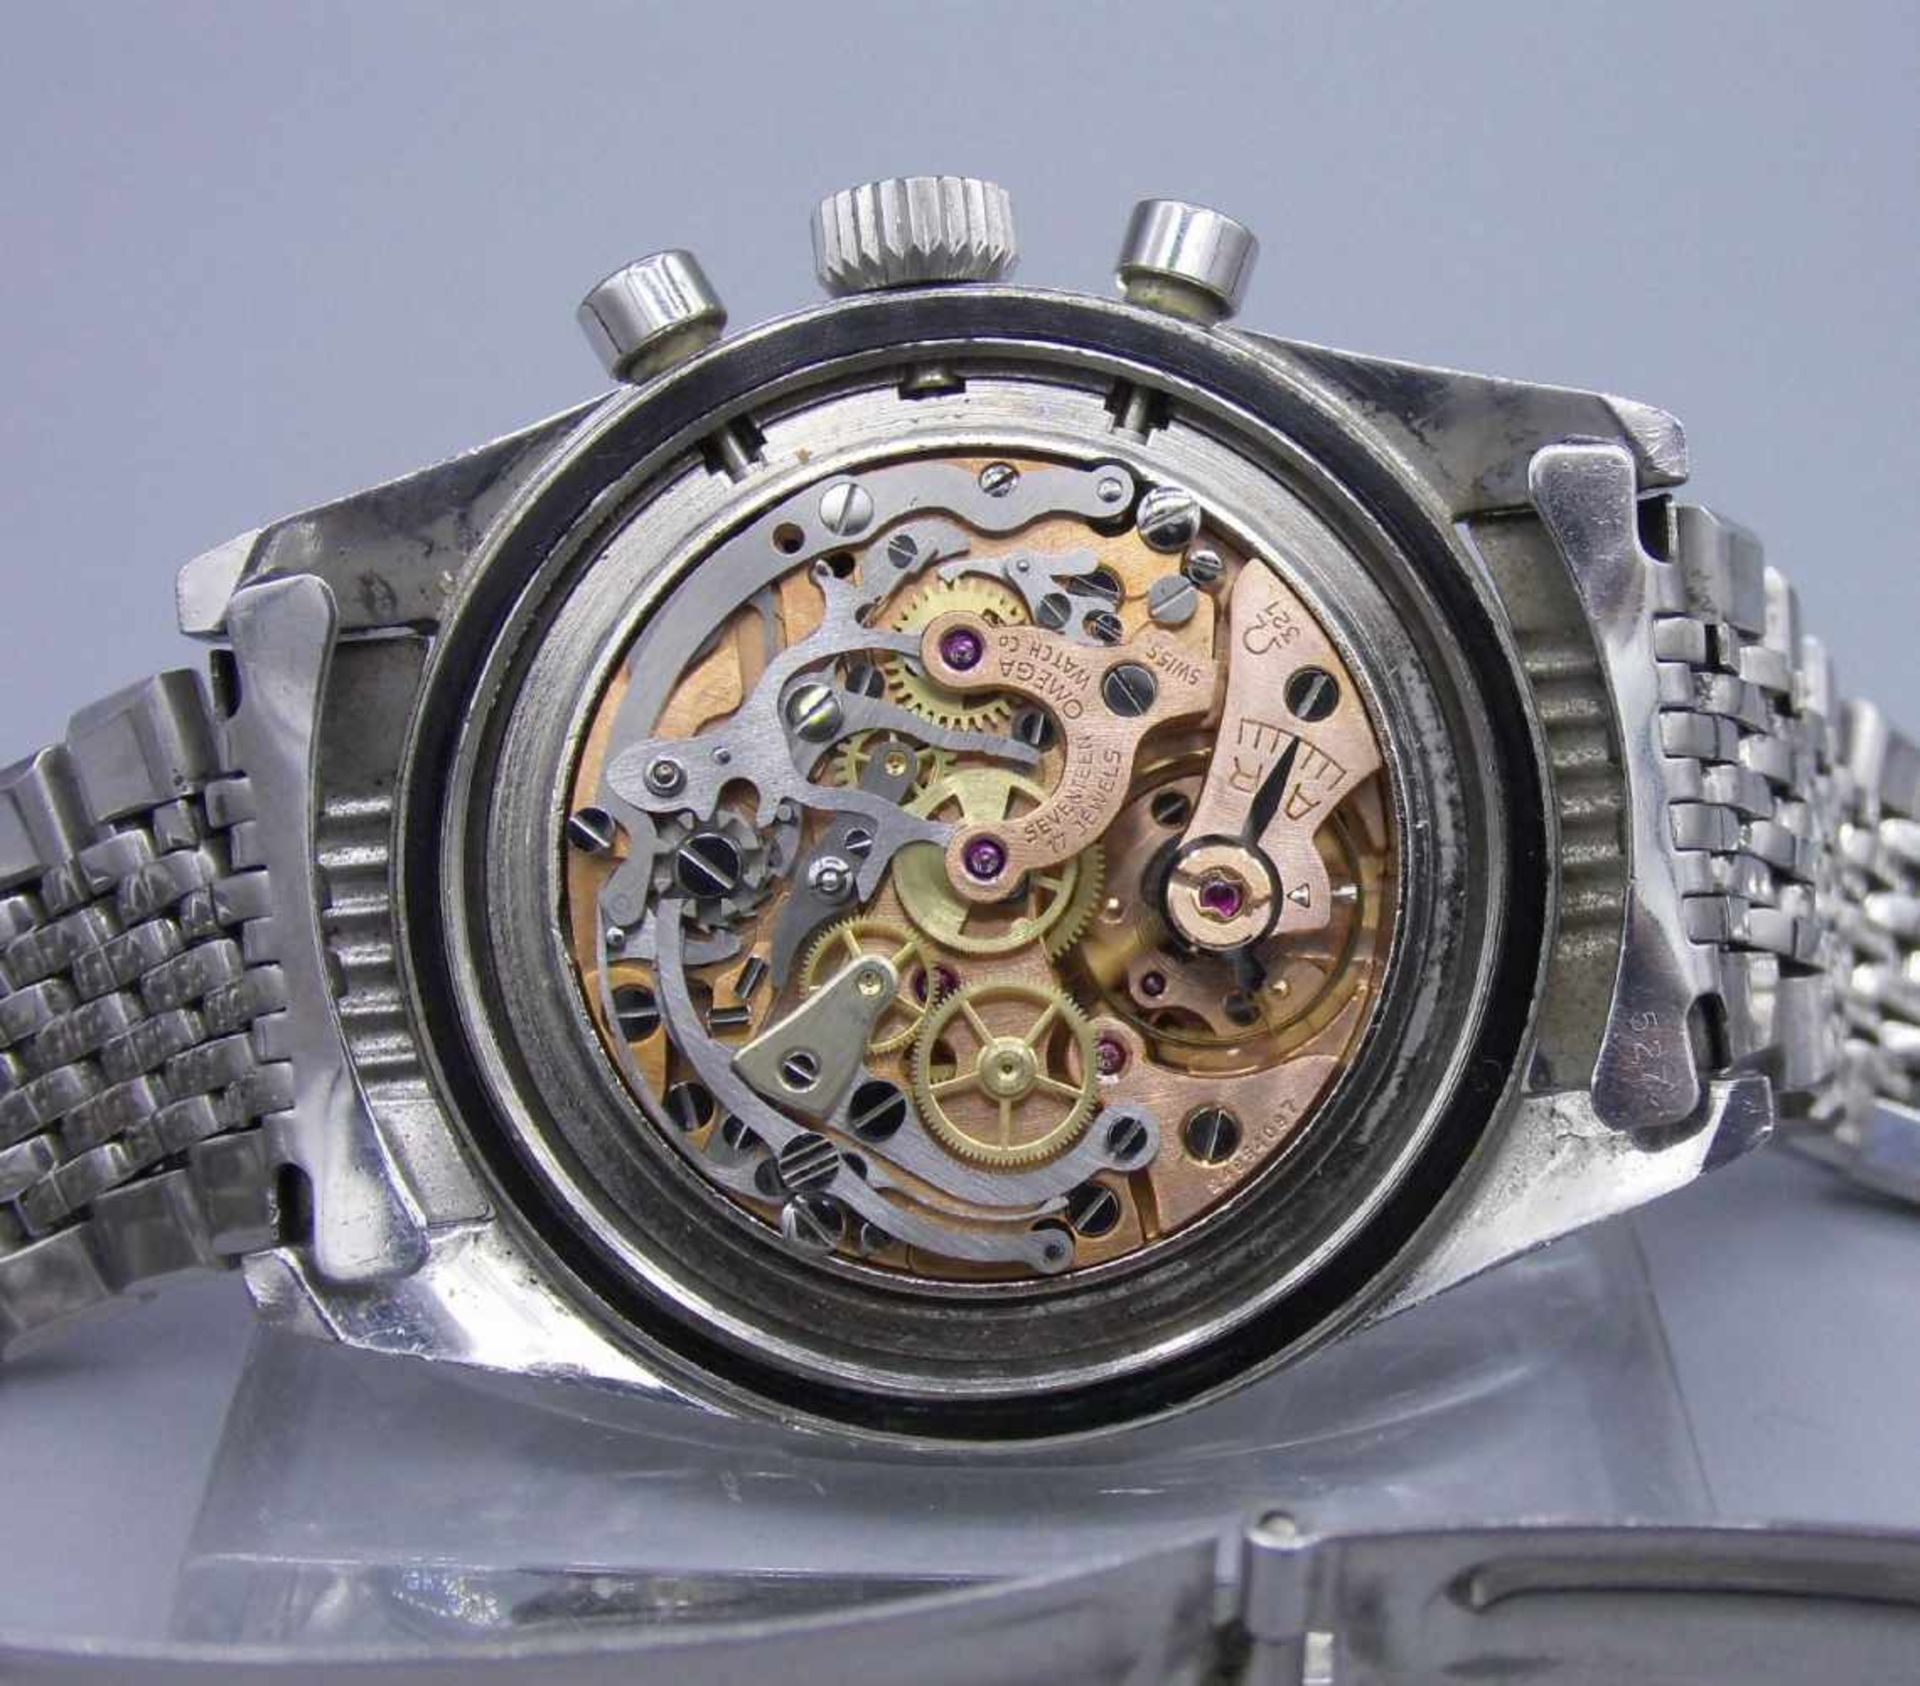 VINTAGE ARMBANDUHR / CHRONOGRAPH - Omega Speedmaster / wristwatch, Handaufzug, 1960er Jahre ( - Bild 4 aus 13